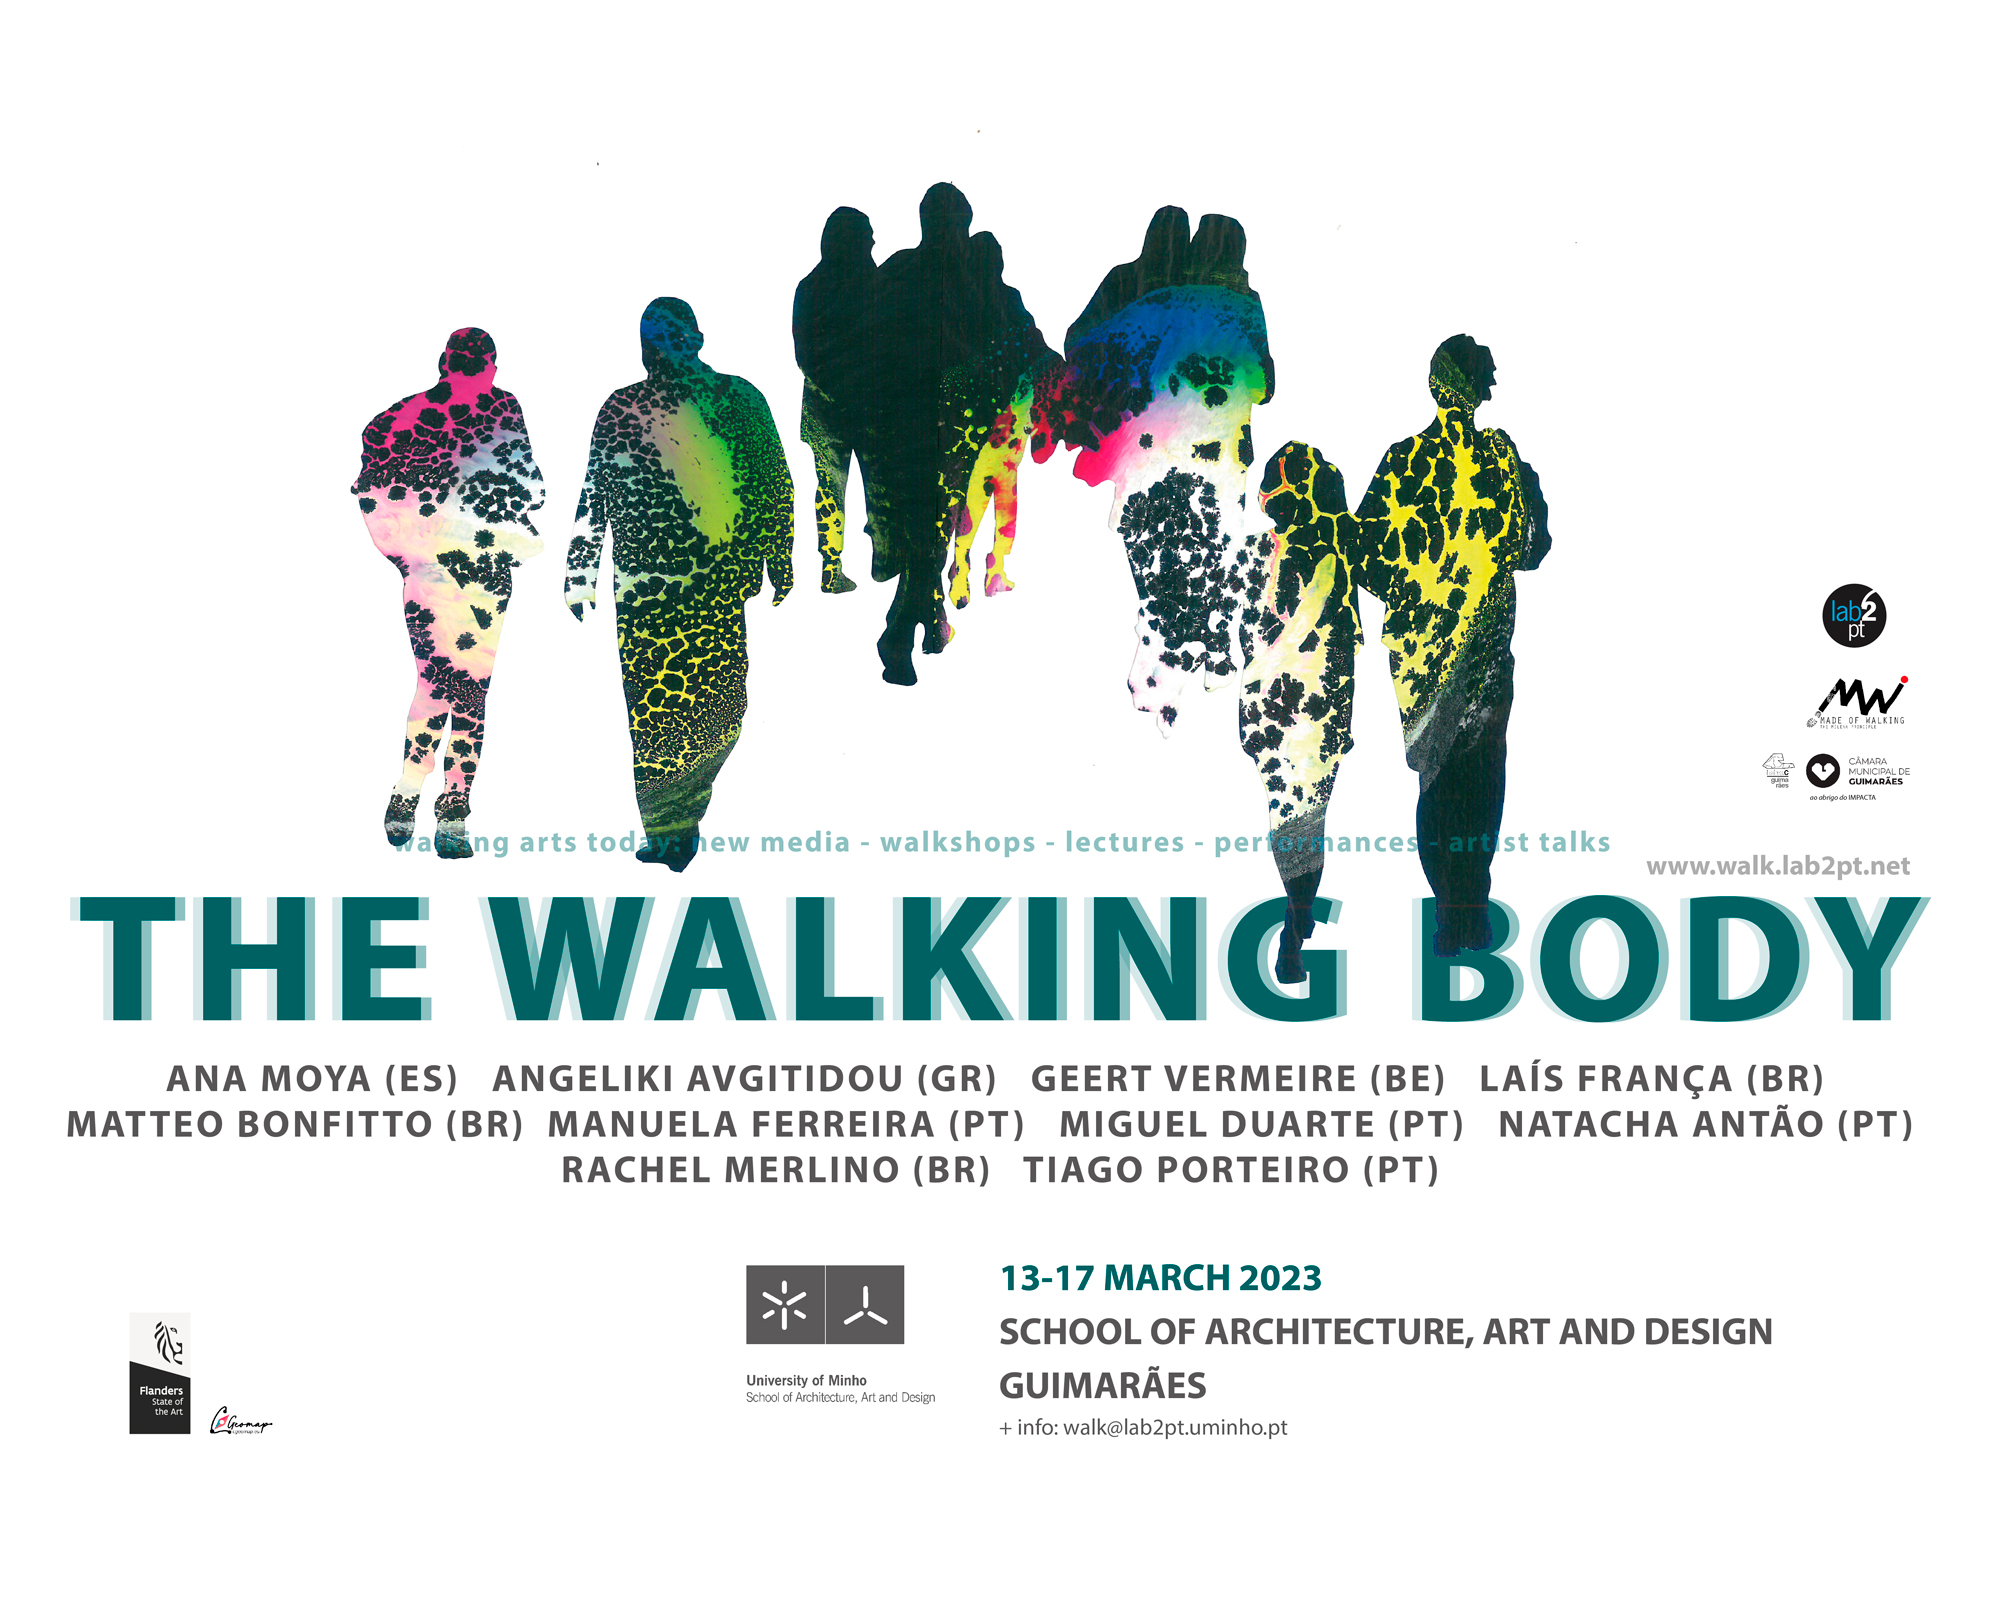 International gathering of walking artists - The Walking Body 4 (TWB4) "compasses - walking communities" image